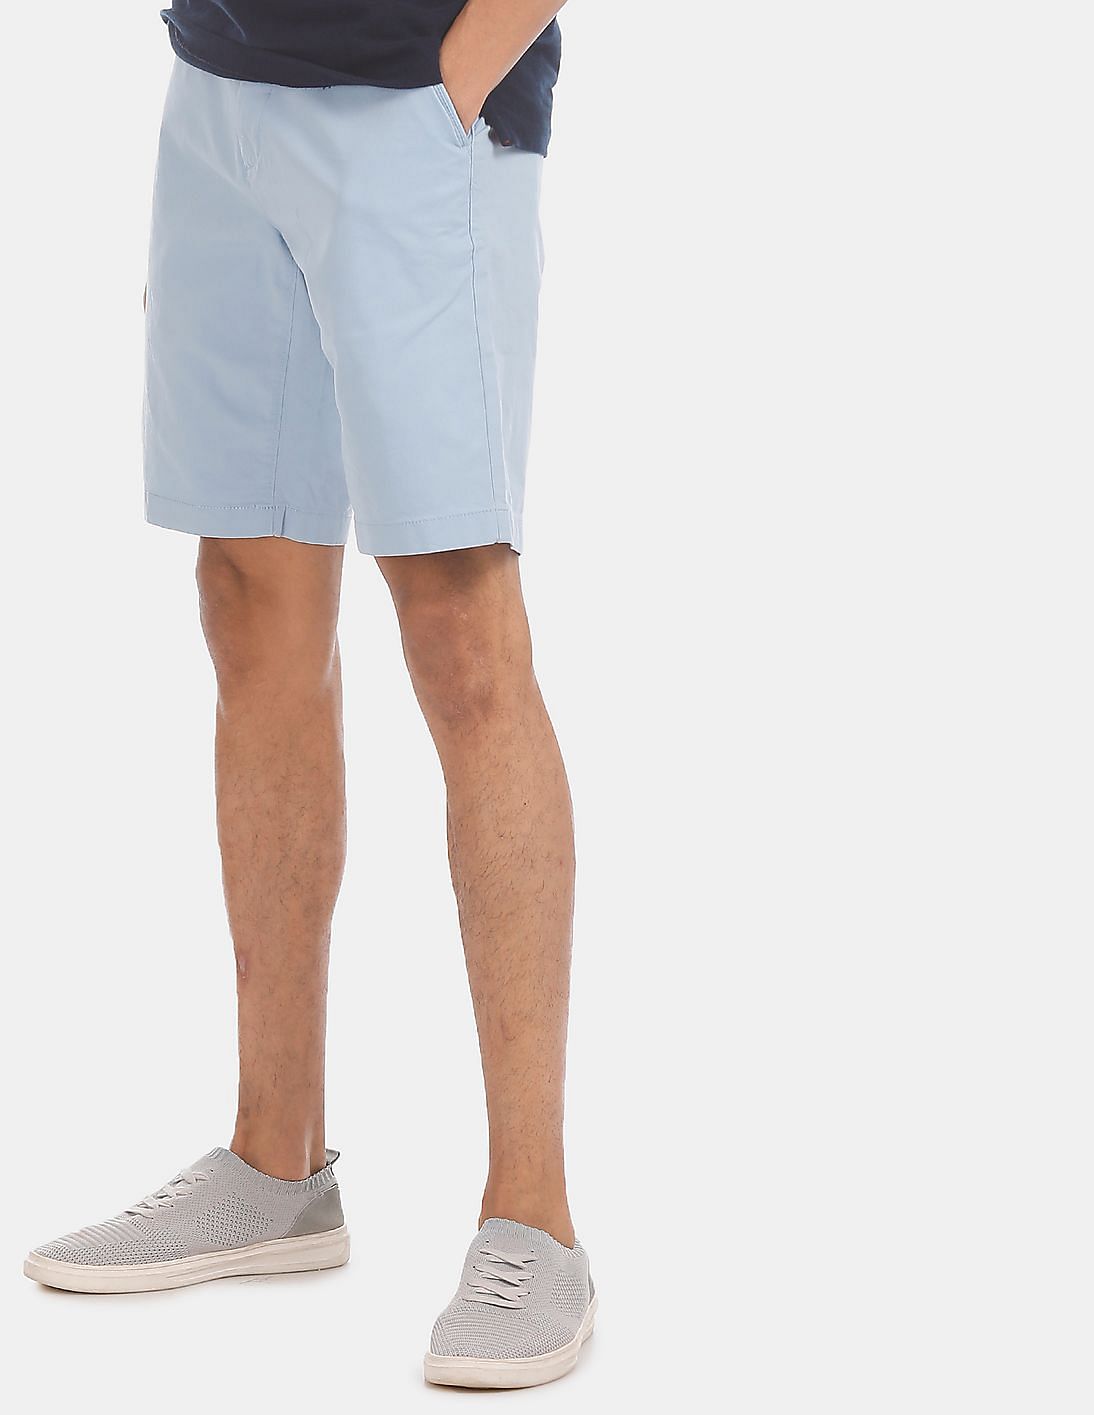 Buy U.S. Polo Assn. Men Blue Solid Cotton Stretch Shorts - NNNOW.com